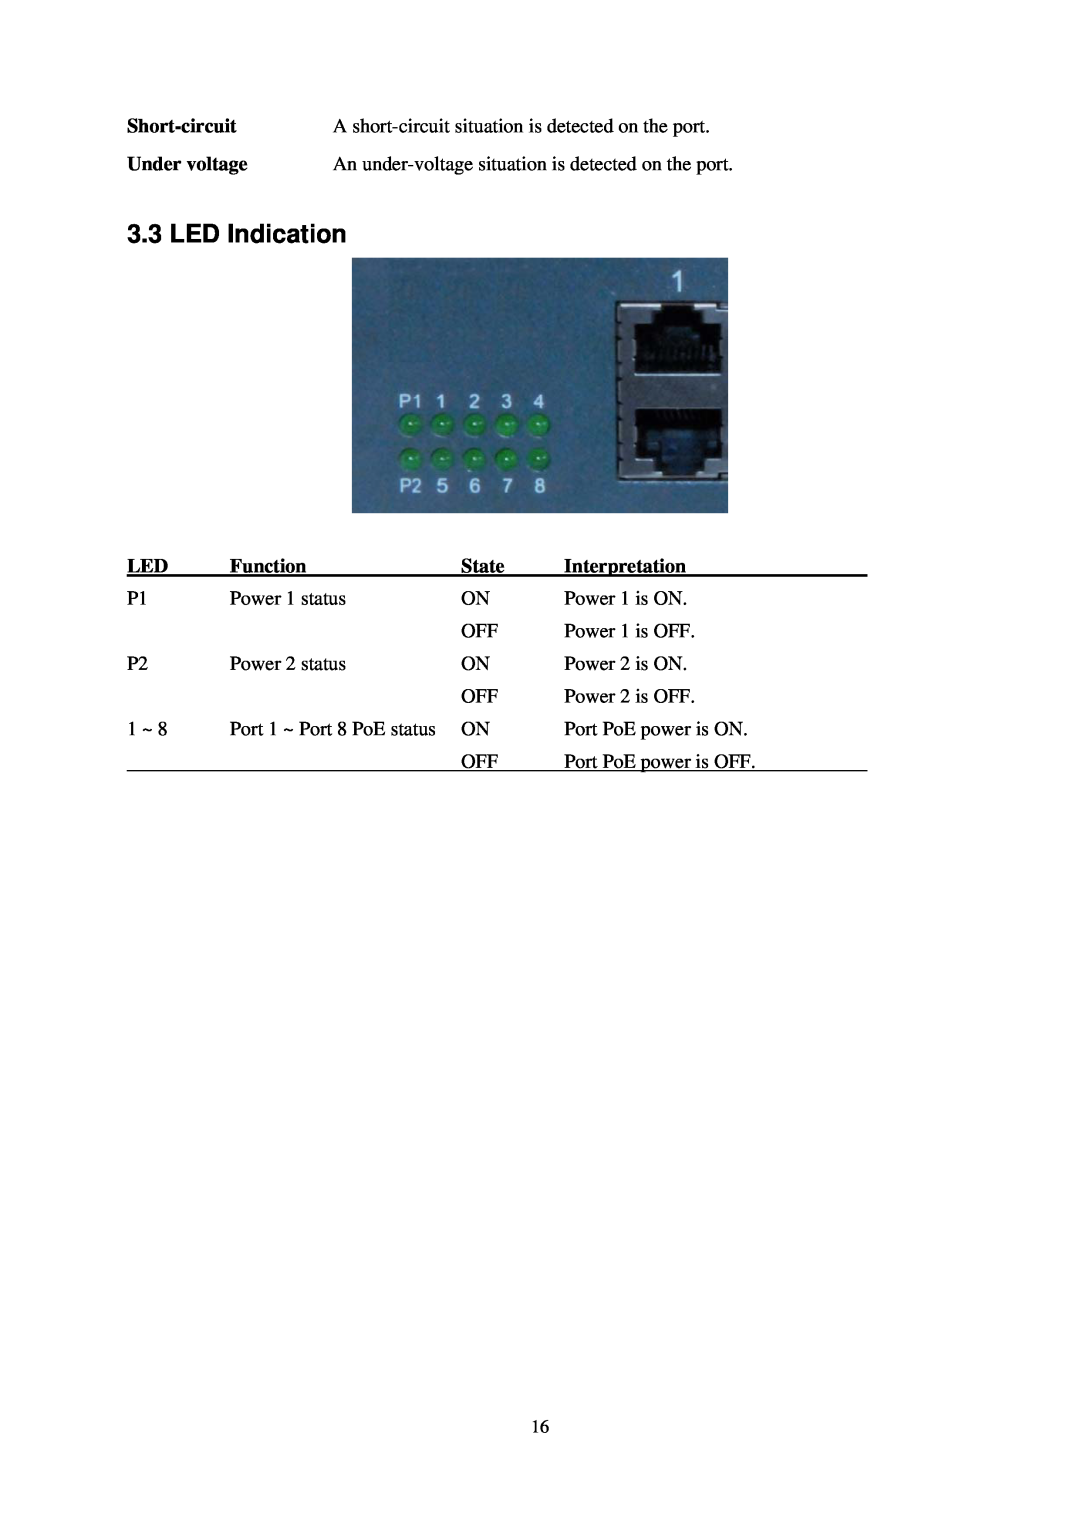 KTI Networks KPOE-800-1P, KPOE-800-2P manual LED Indication, Short-circuit, Under voltage, Function, State, Interpretation 